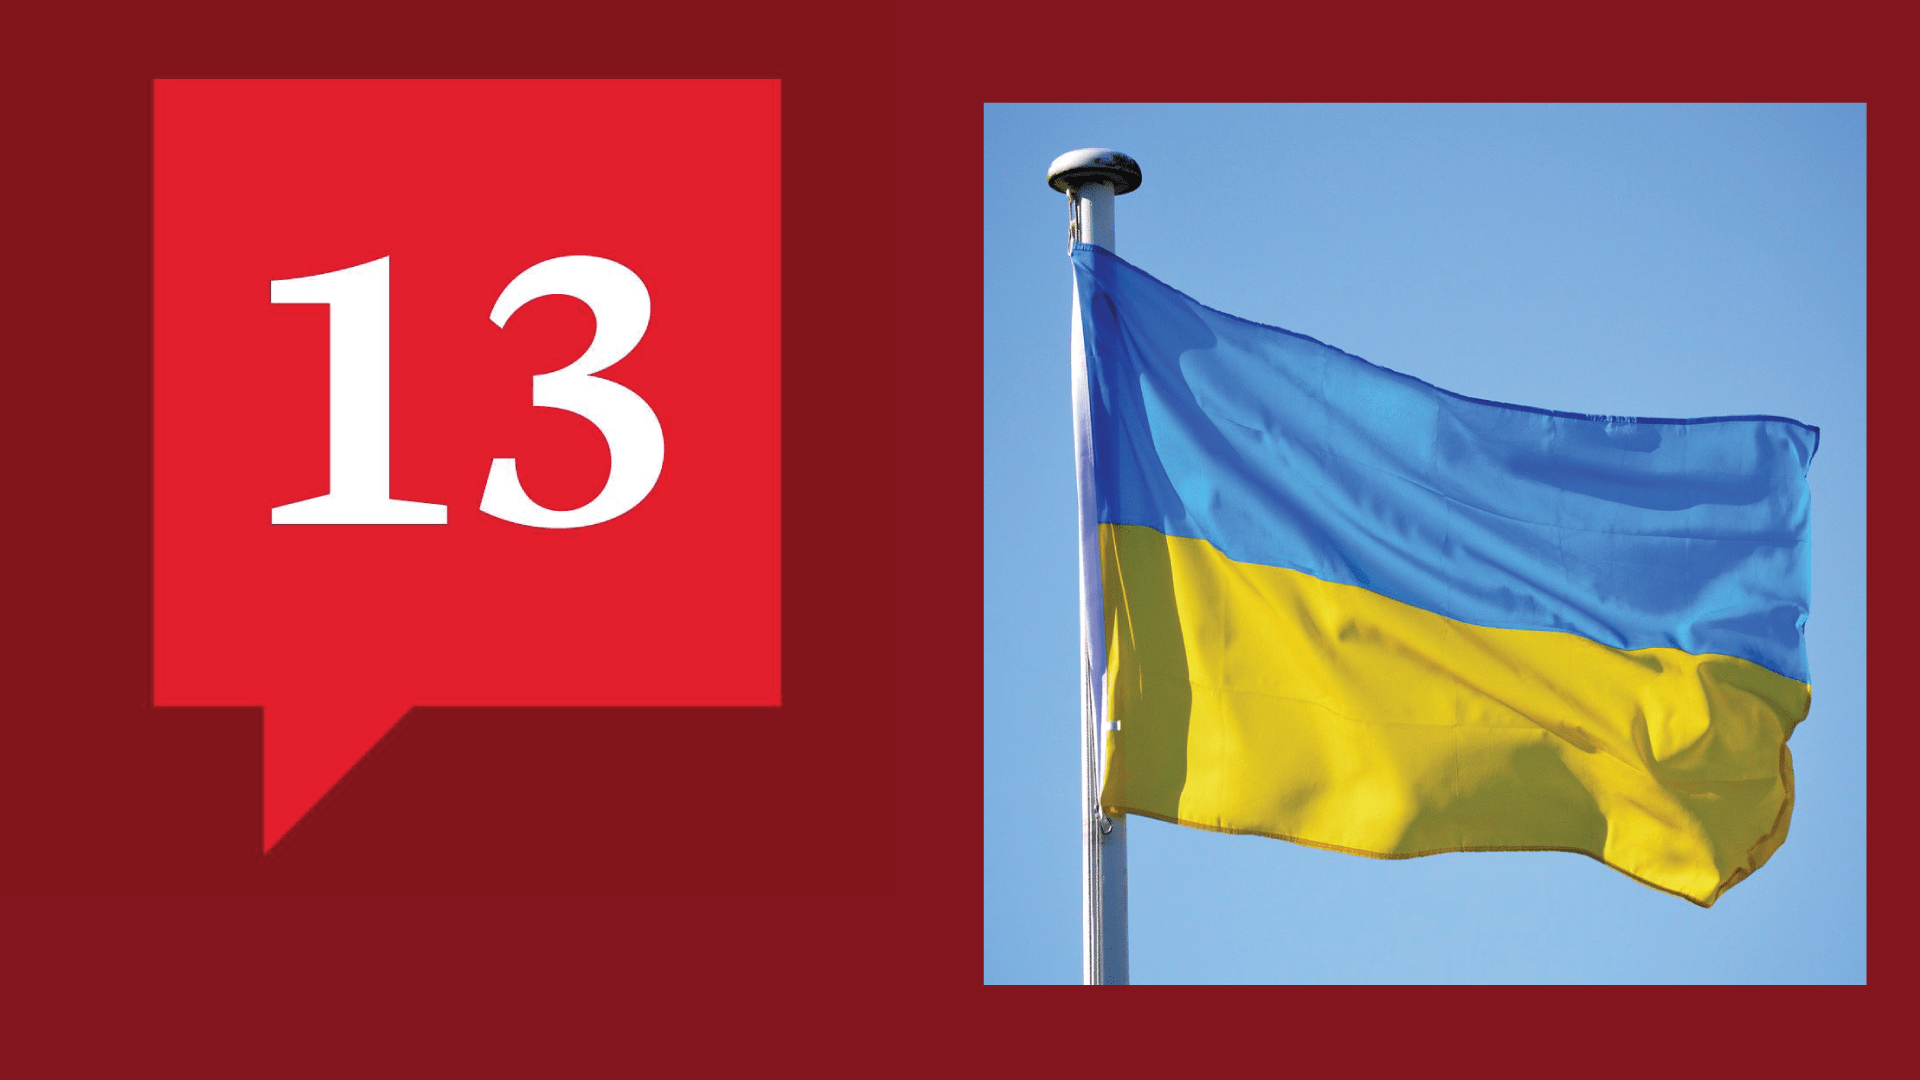 Ukrainian flag and 13 podcast icon